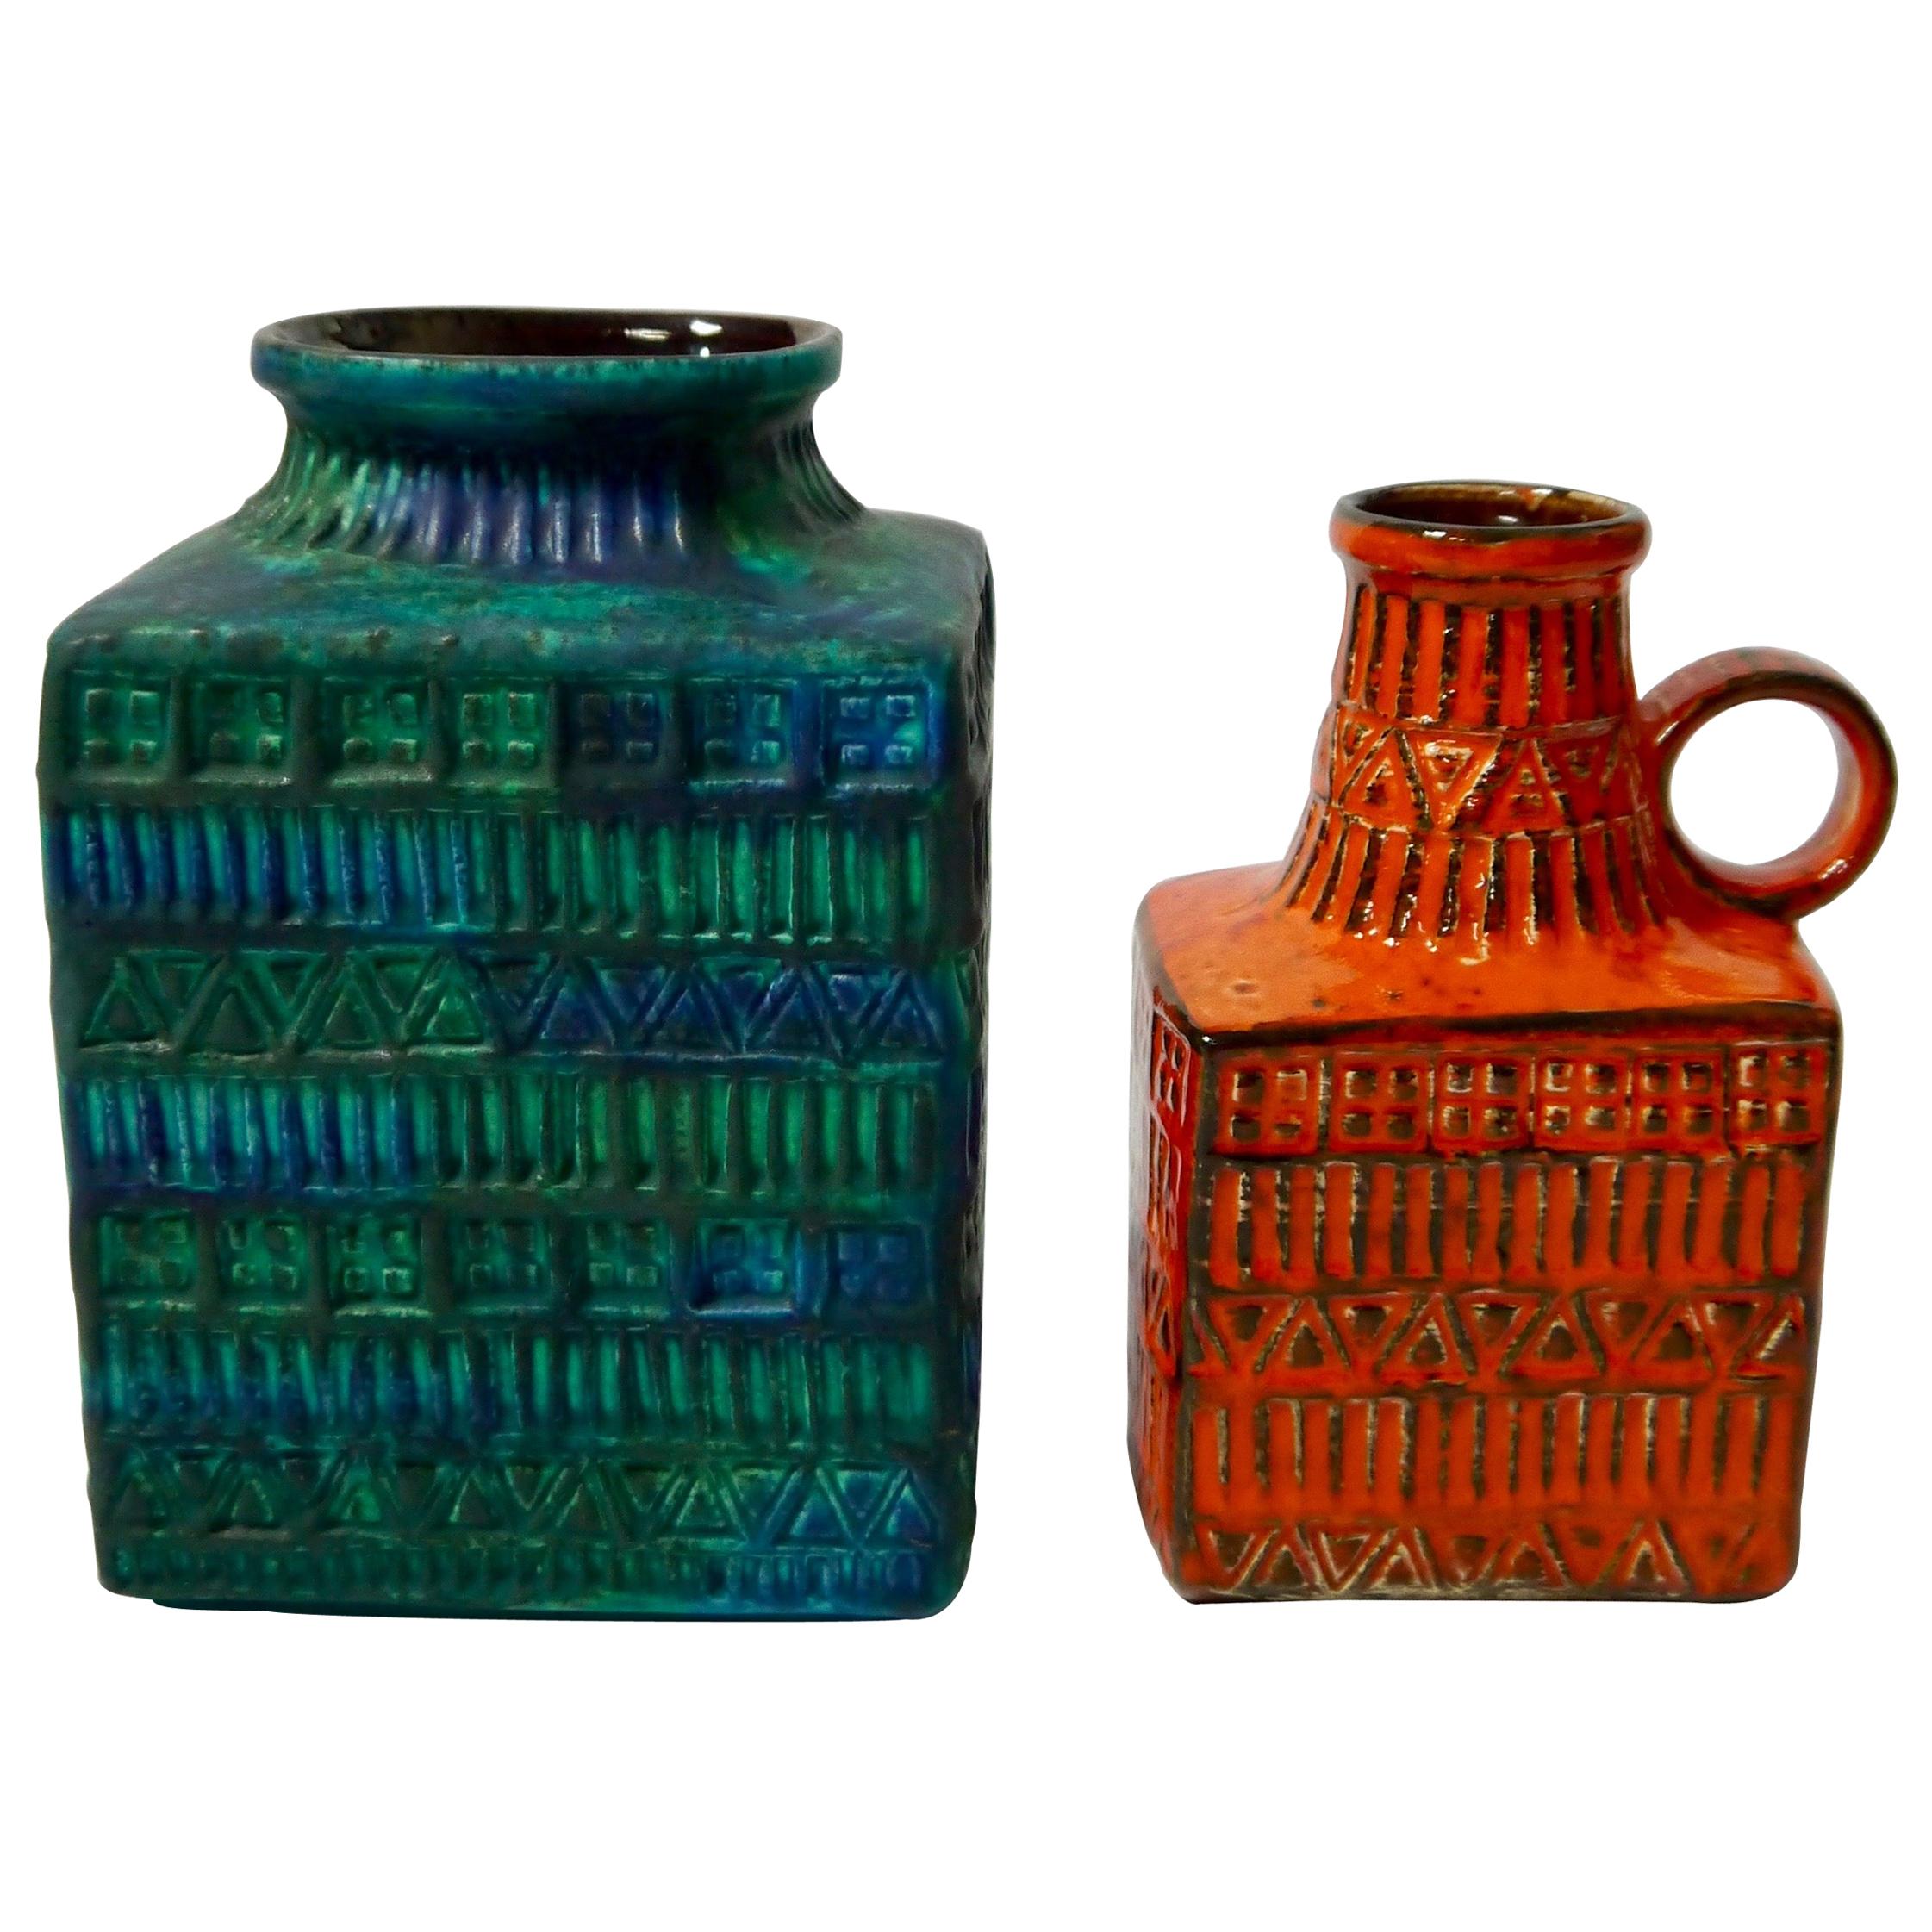 Modernist W Germany ceramic vase Mid-century Retro art pottery decor 12\u2019\u2019 tall